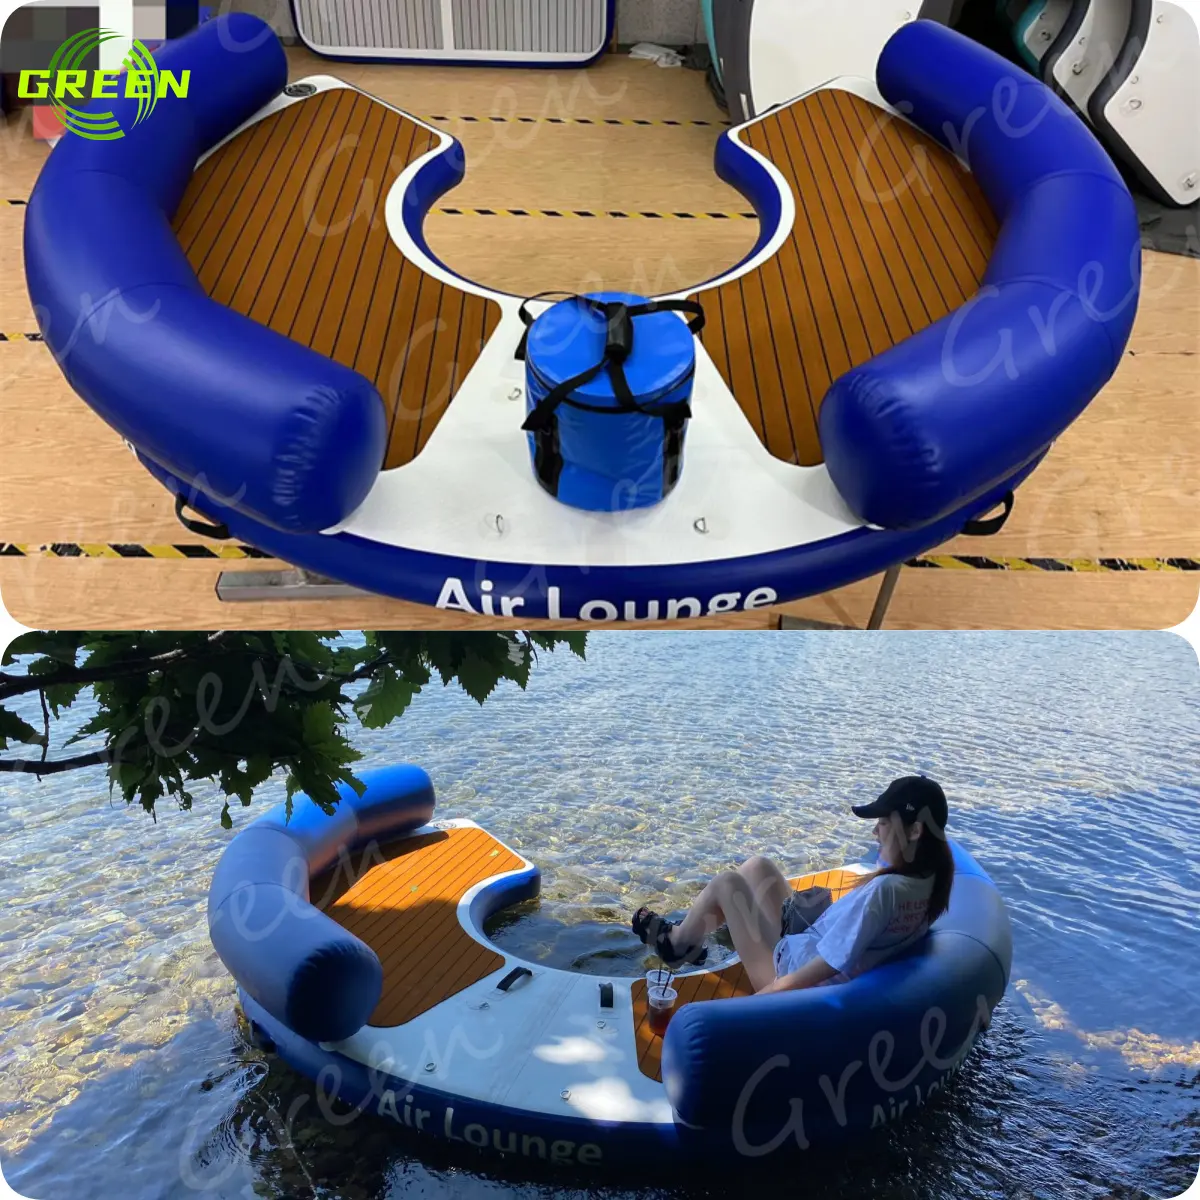 Green float bridg gonfiabile galleggiante nuoto commerciale gonfiabile isola C dock platform